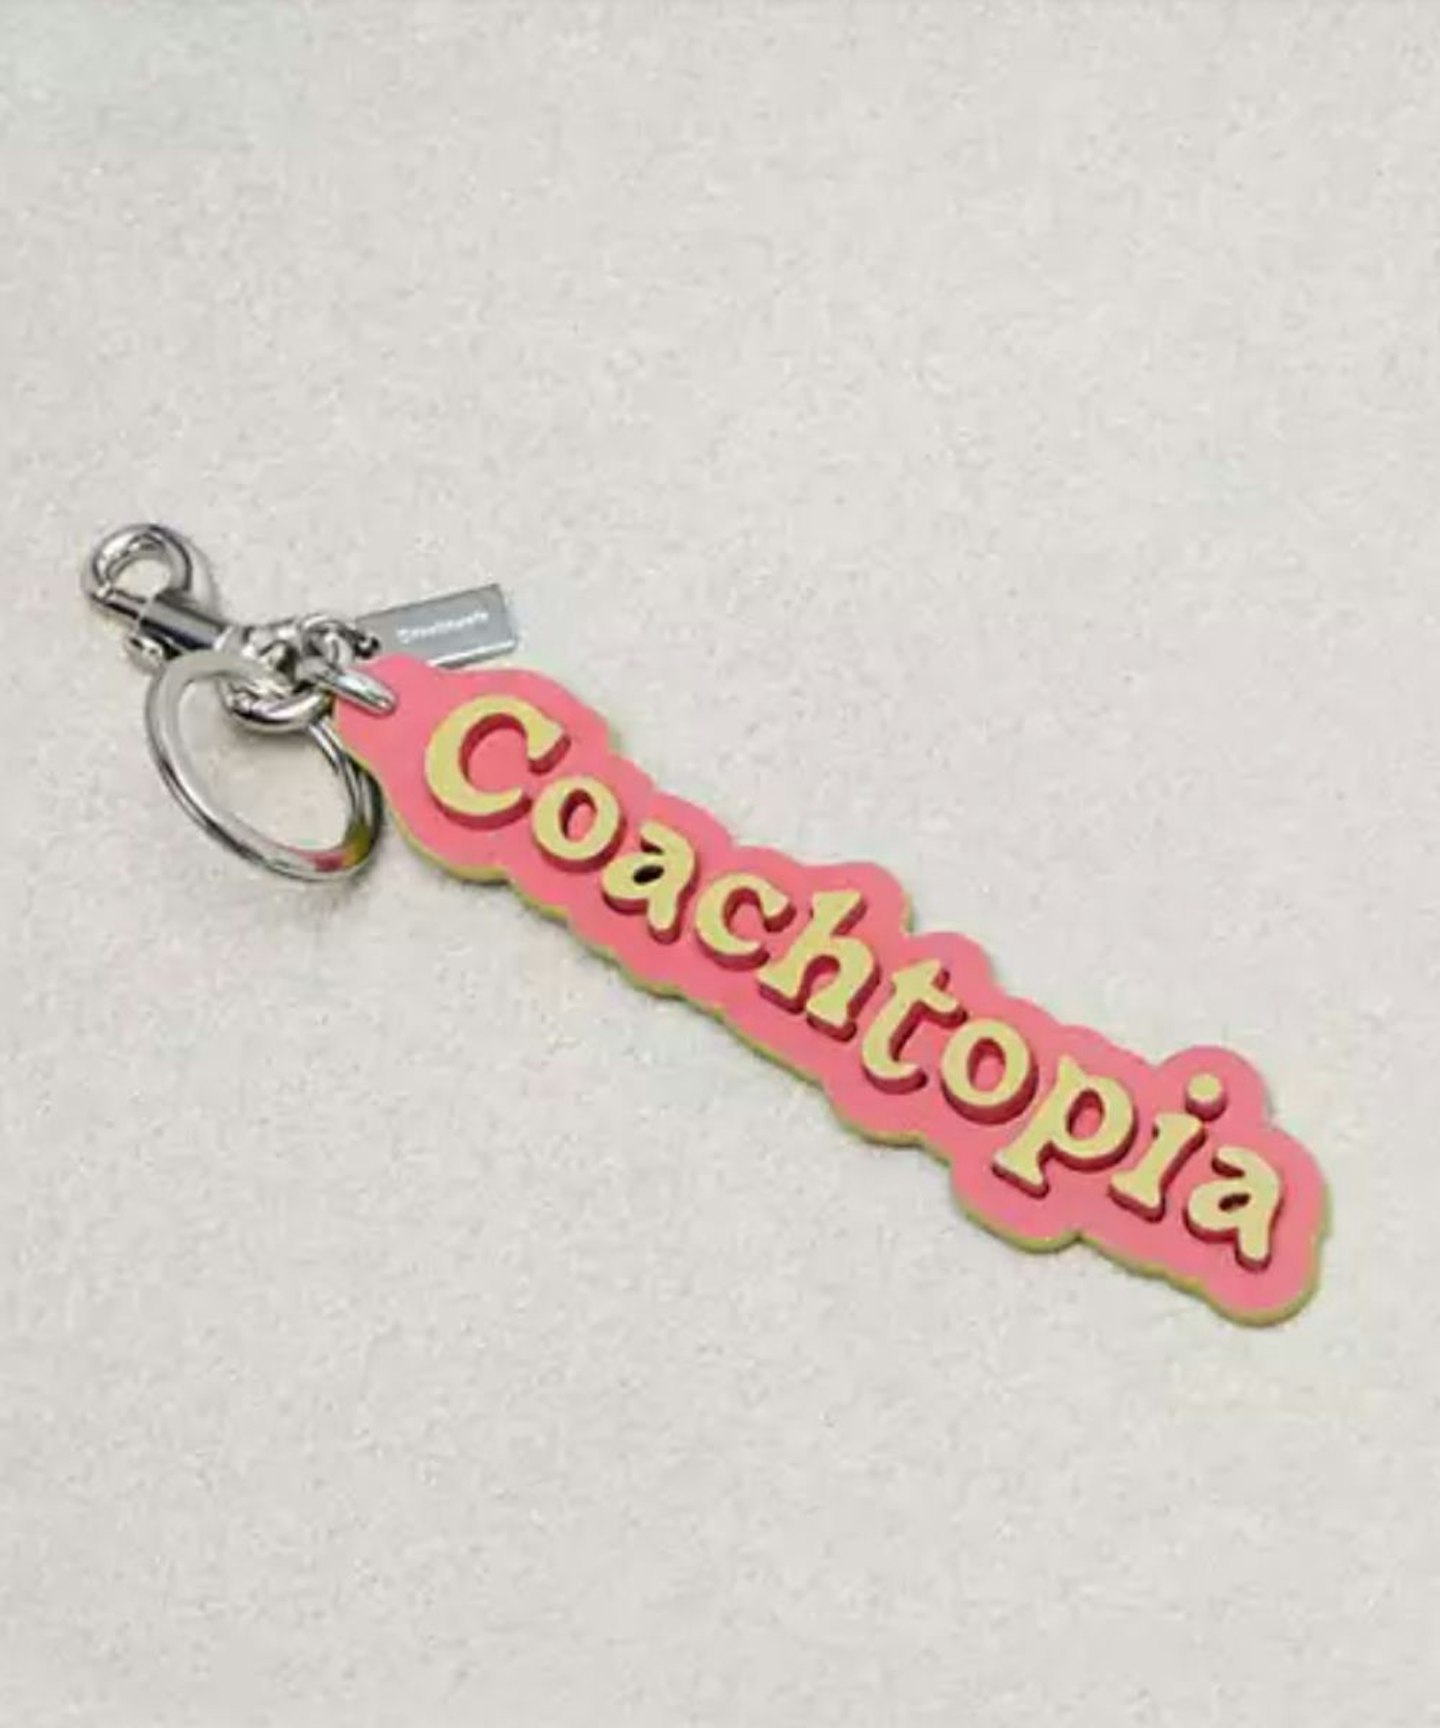 Coachtopia Bag Charm In Coachtopia Leather